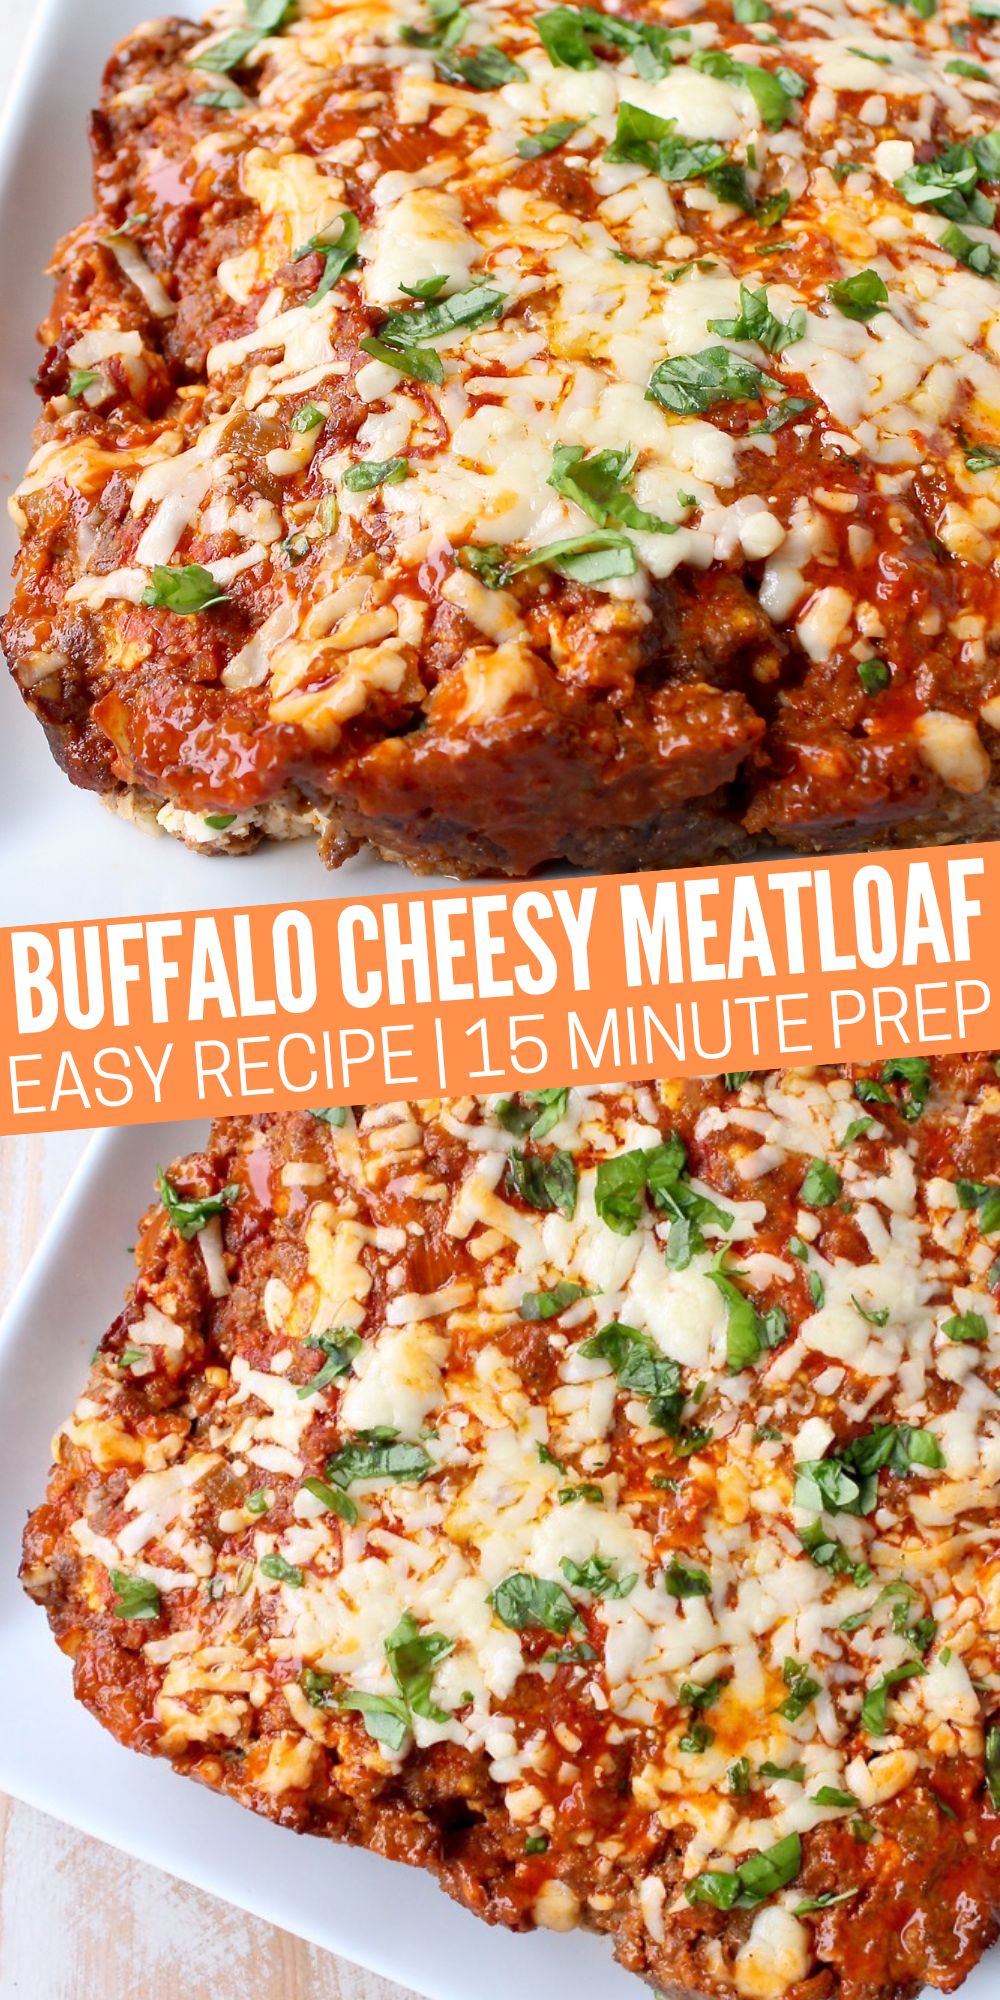 Buffalo Cheesy Meatloaf Recipe